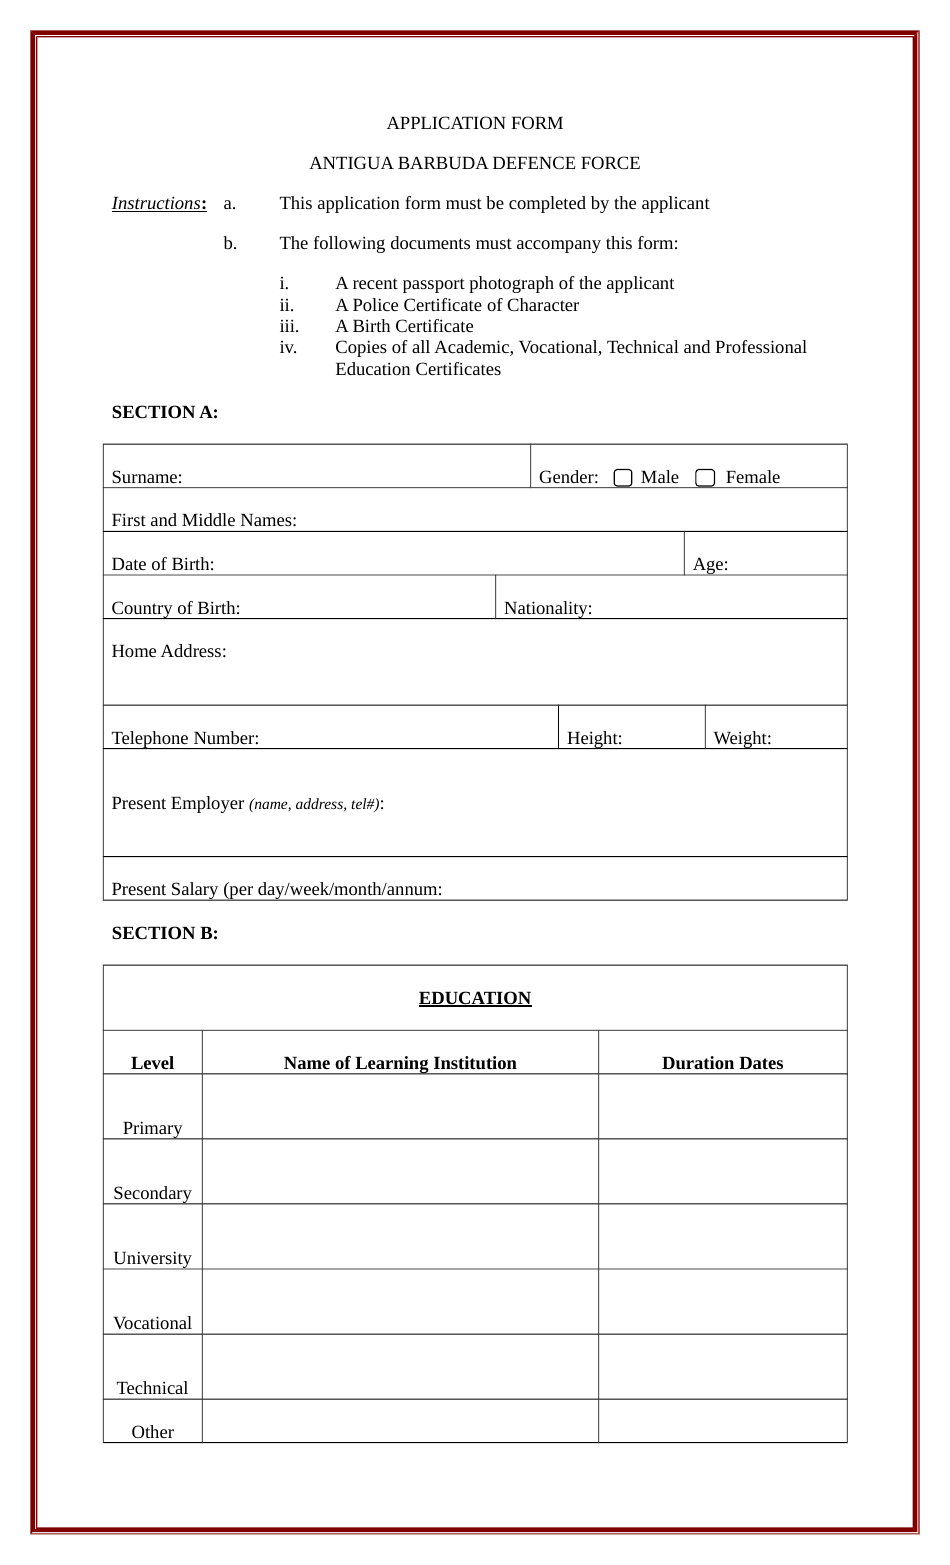 Antigua And Barbuda Application Form Download Printable